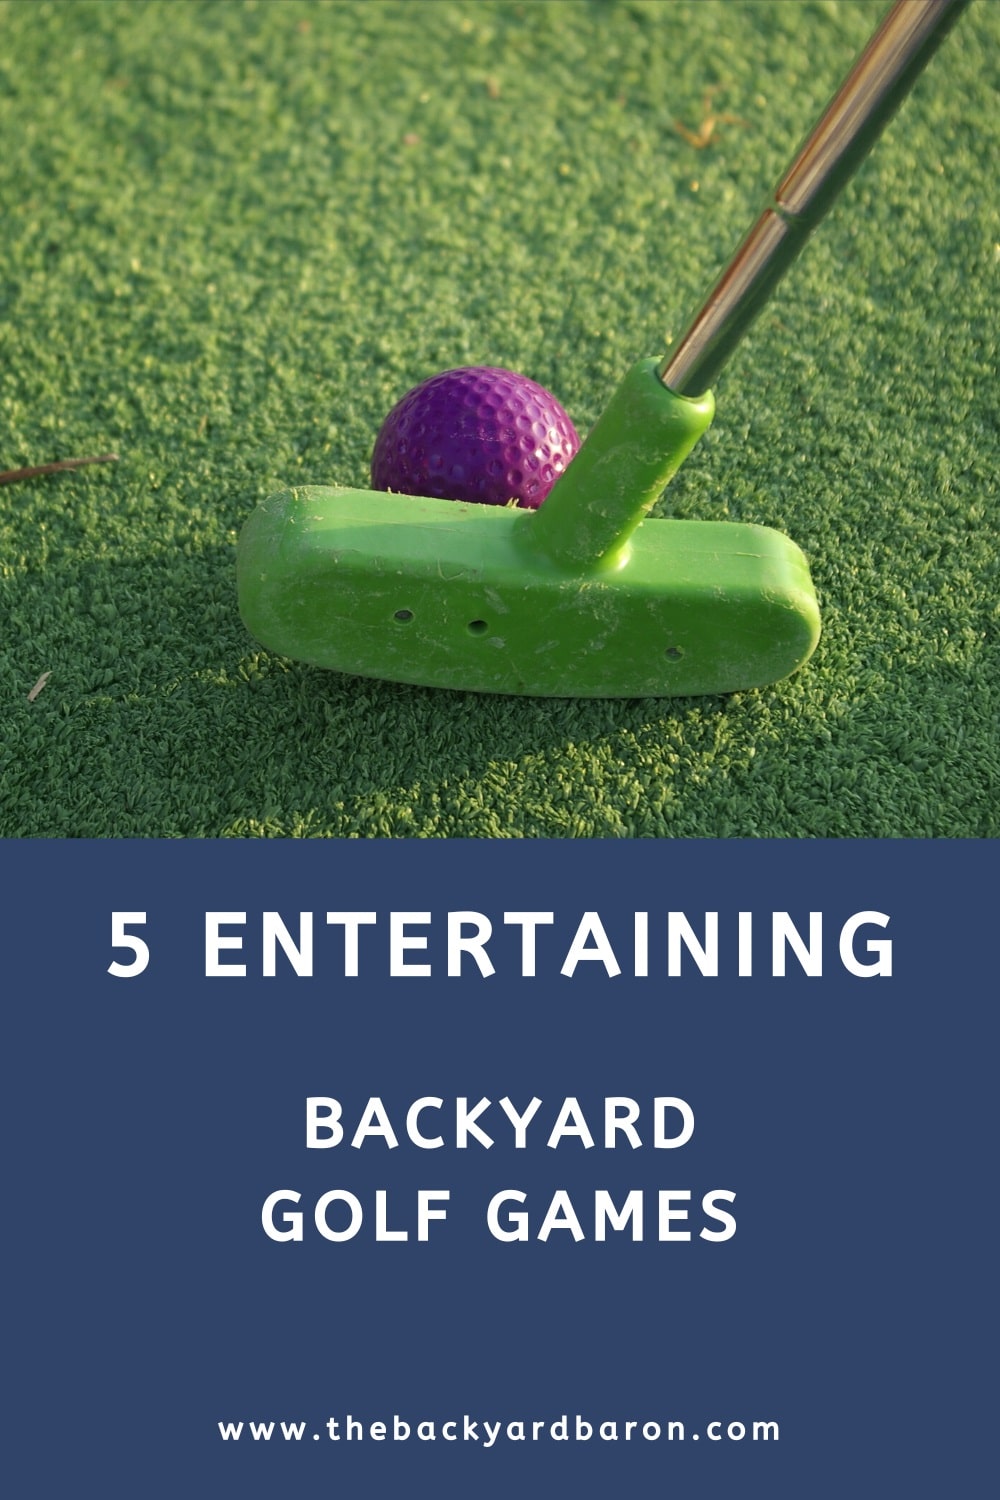 5 Entertaining backyard golf games